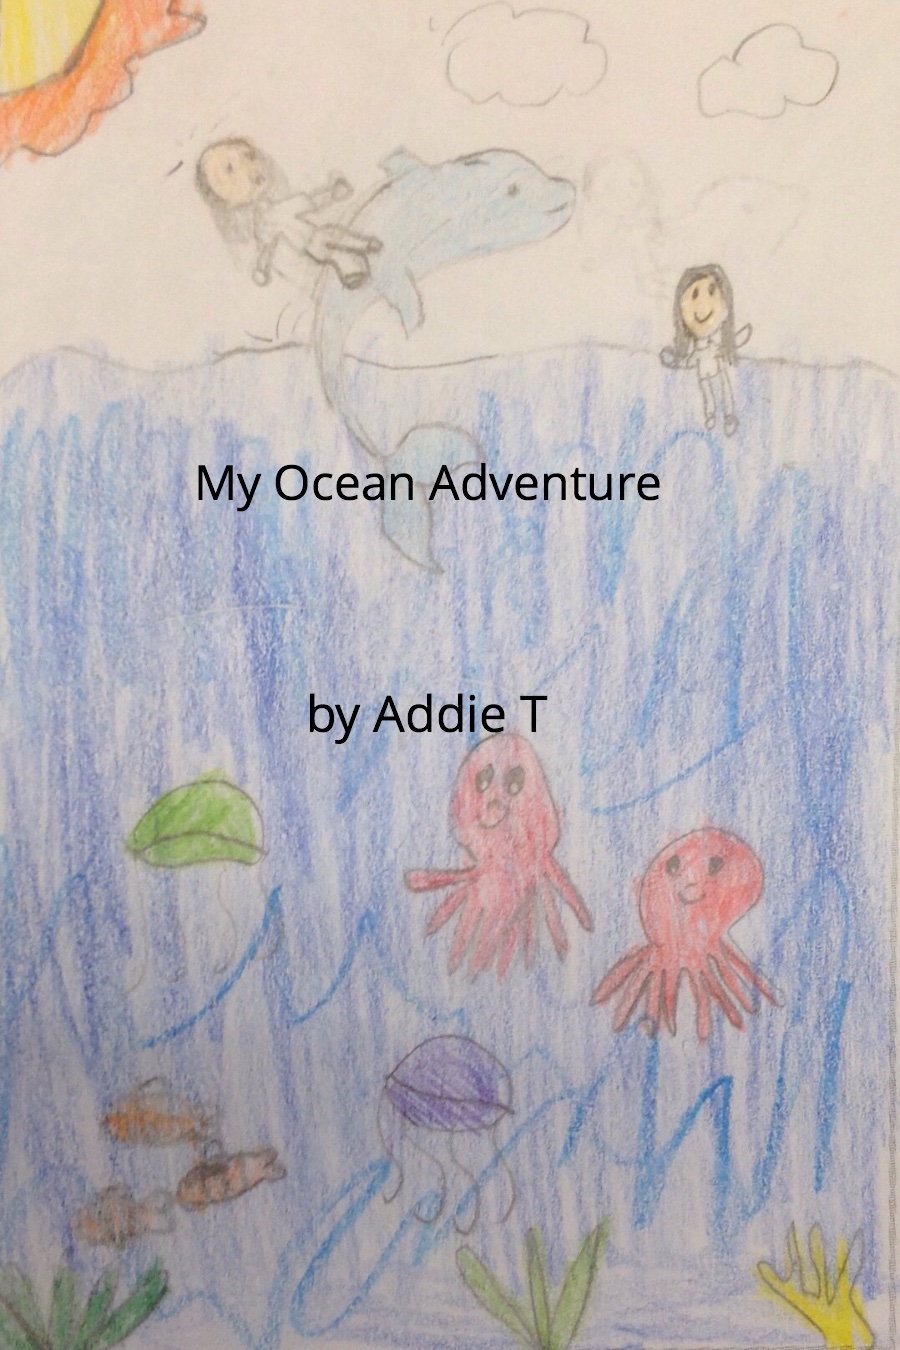 My Ocean Adventure by Addie T